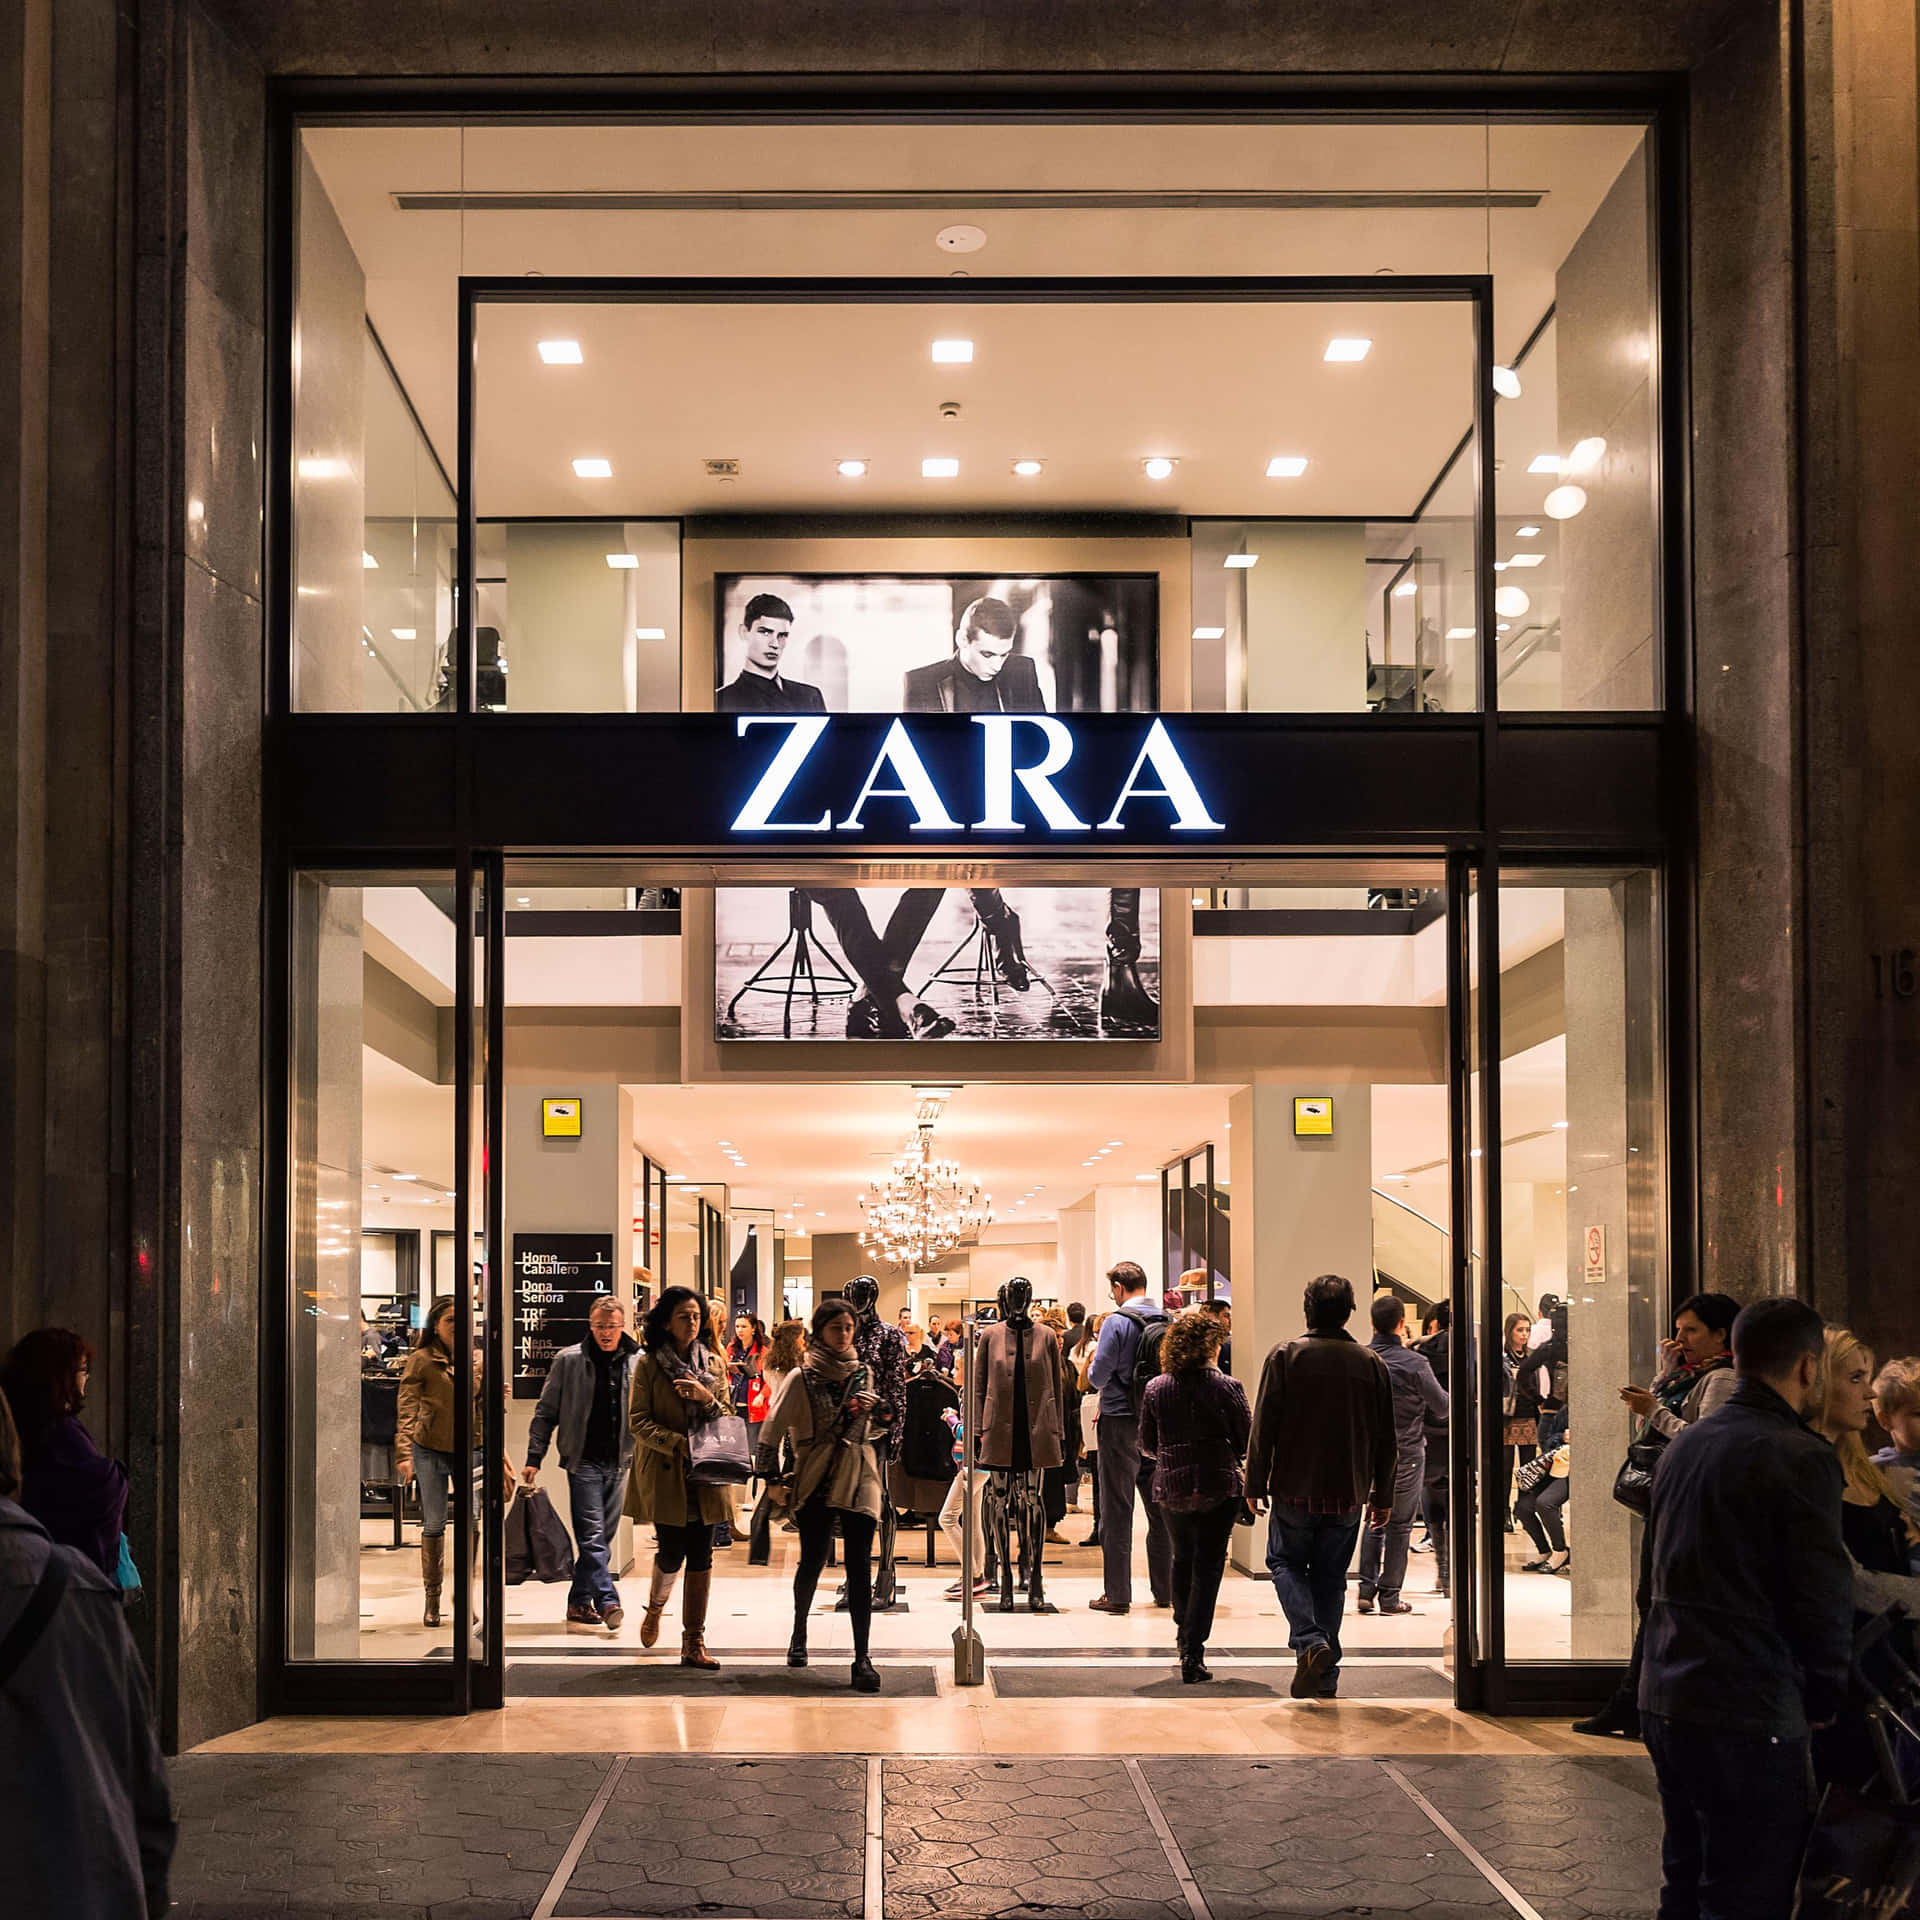 Look stylish and be fashionably conscious with Zara